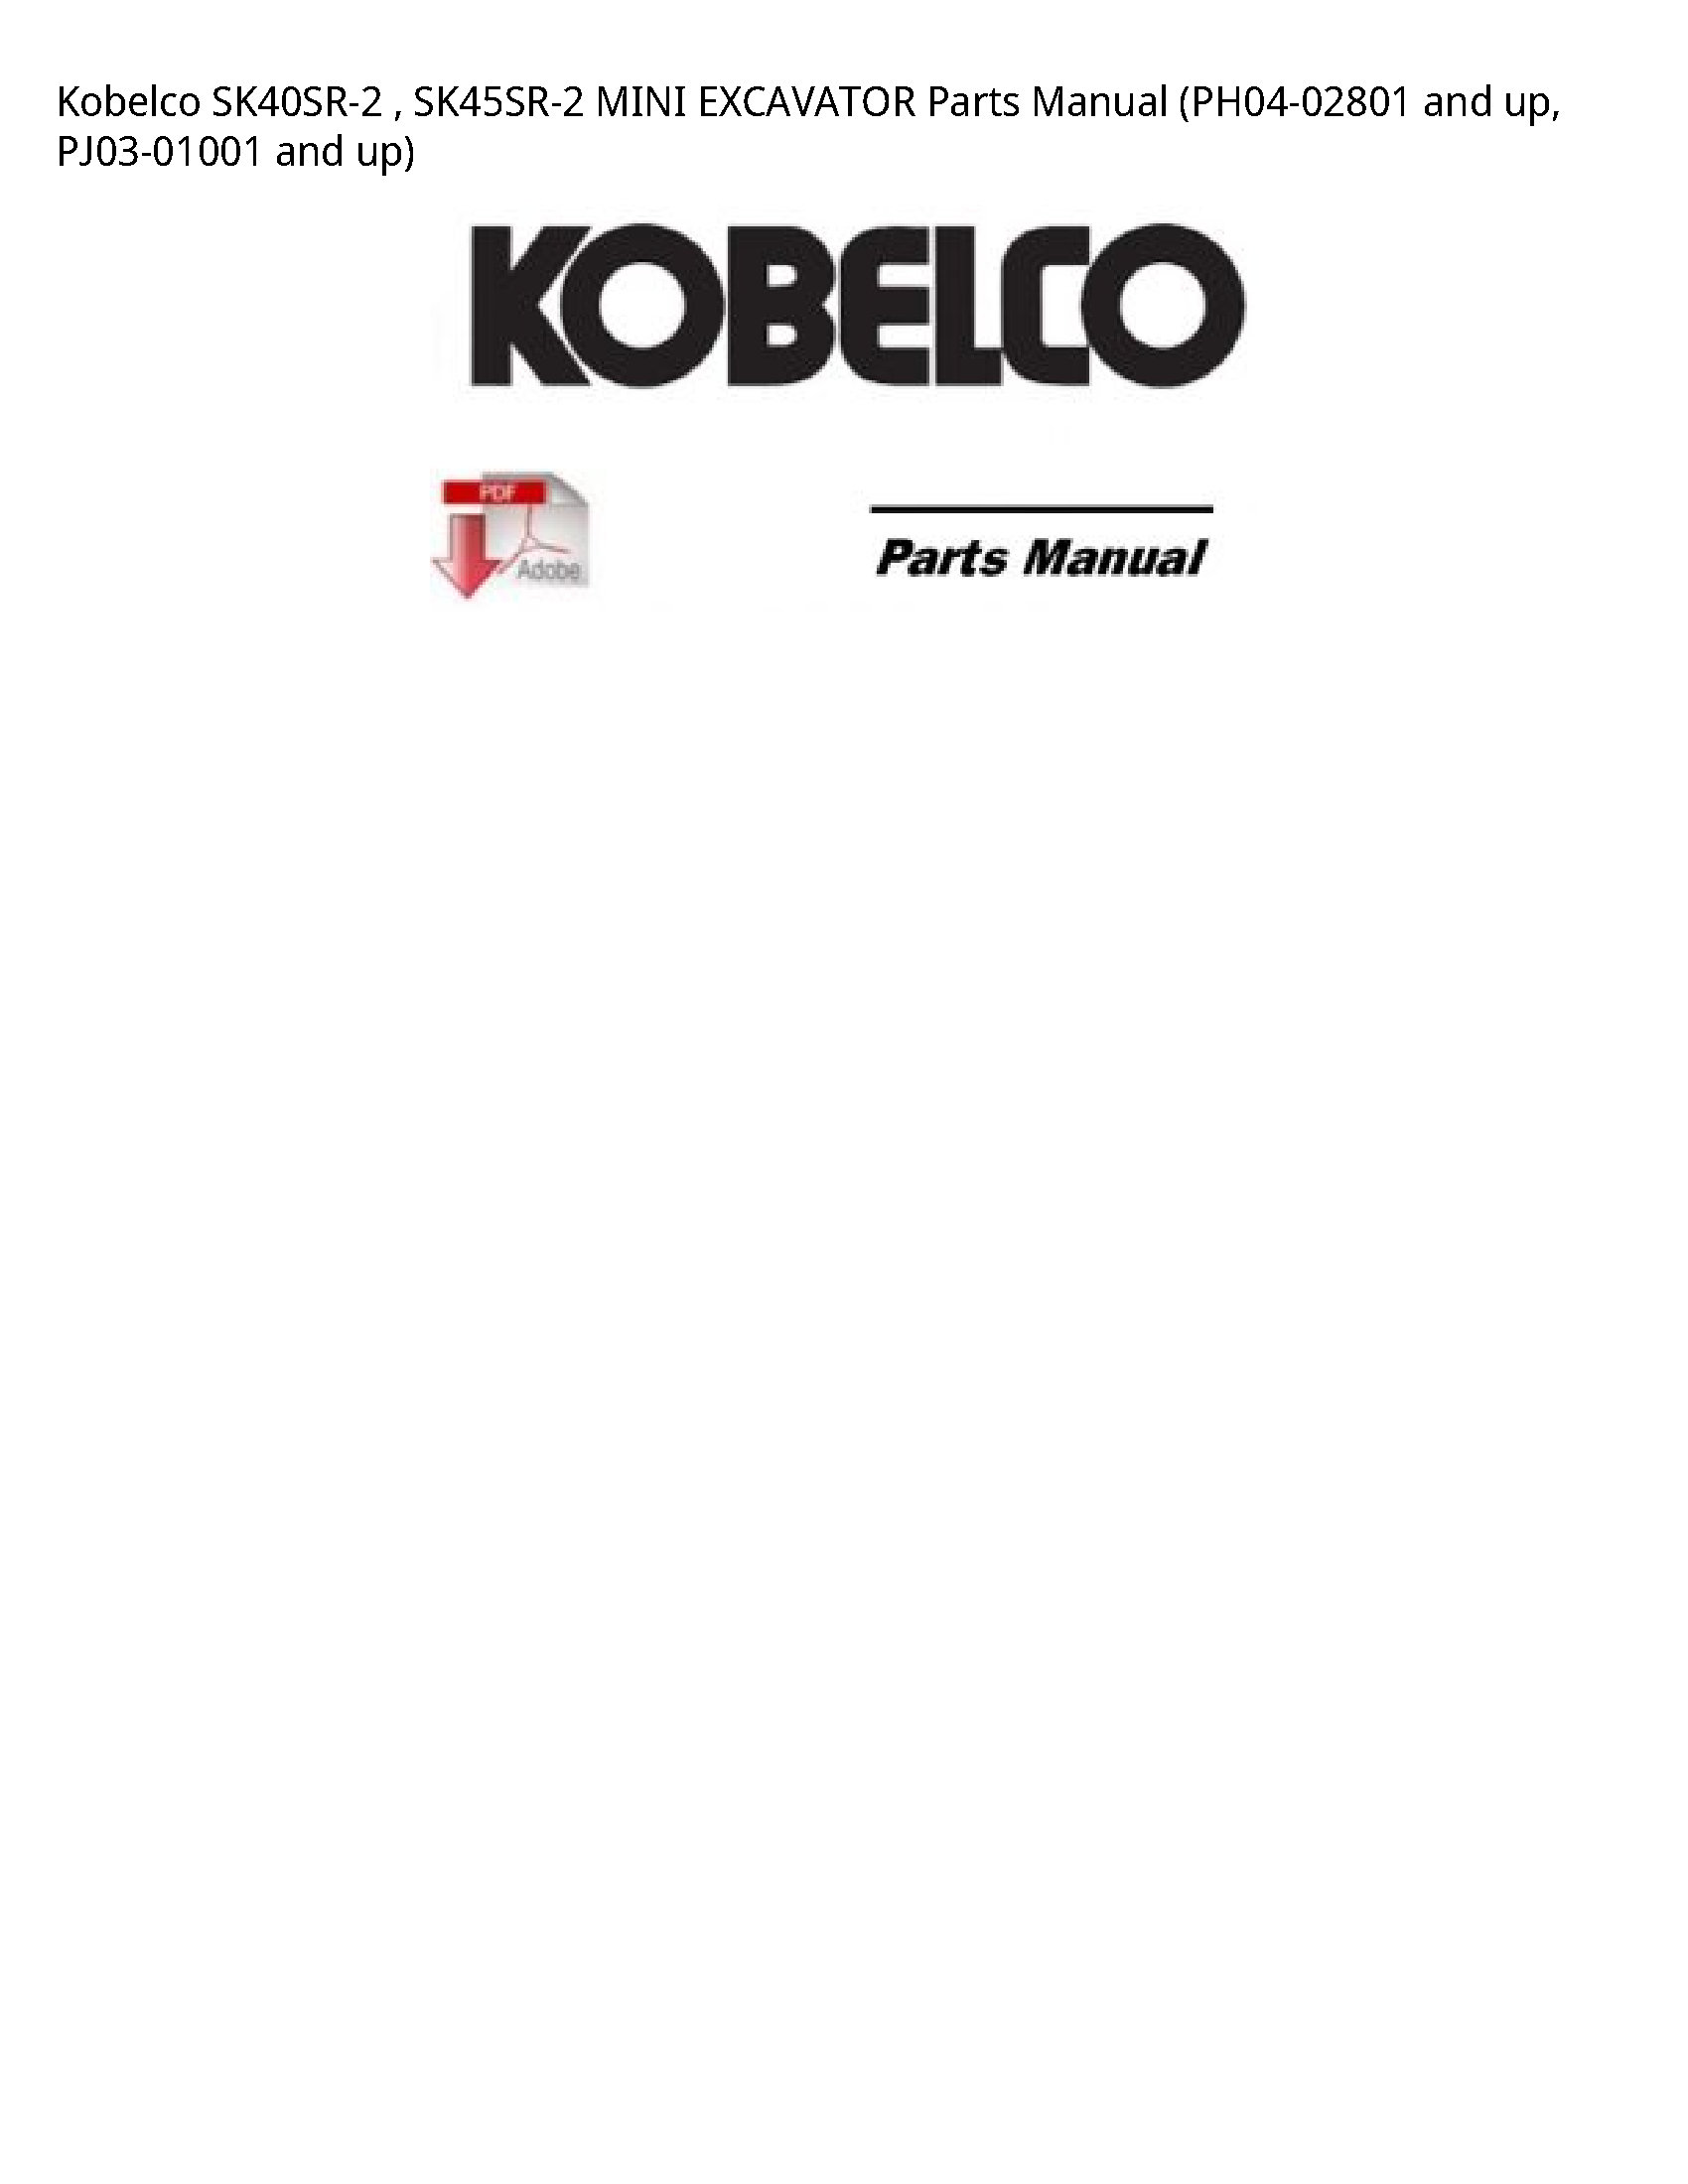 Kobelco SK40SR-2 MINI EXCAVATOR Parts manual